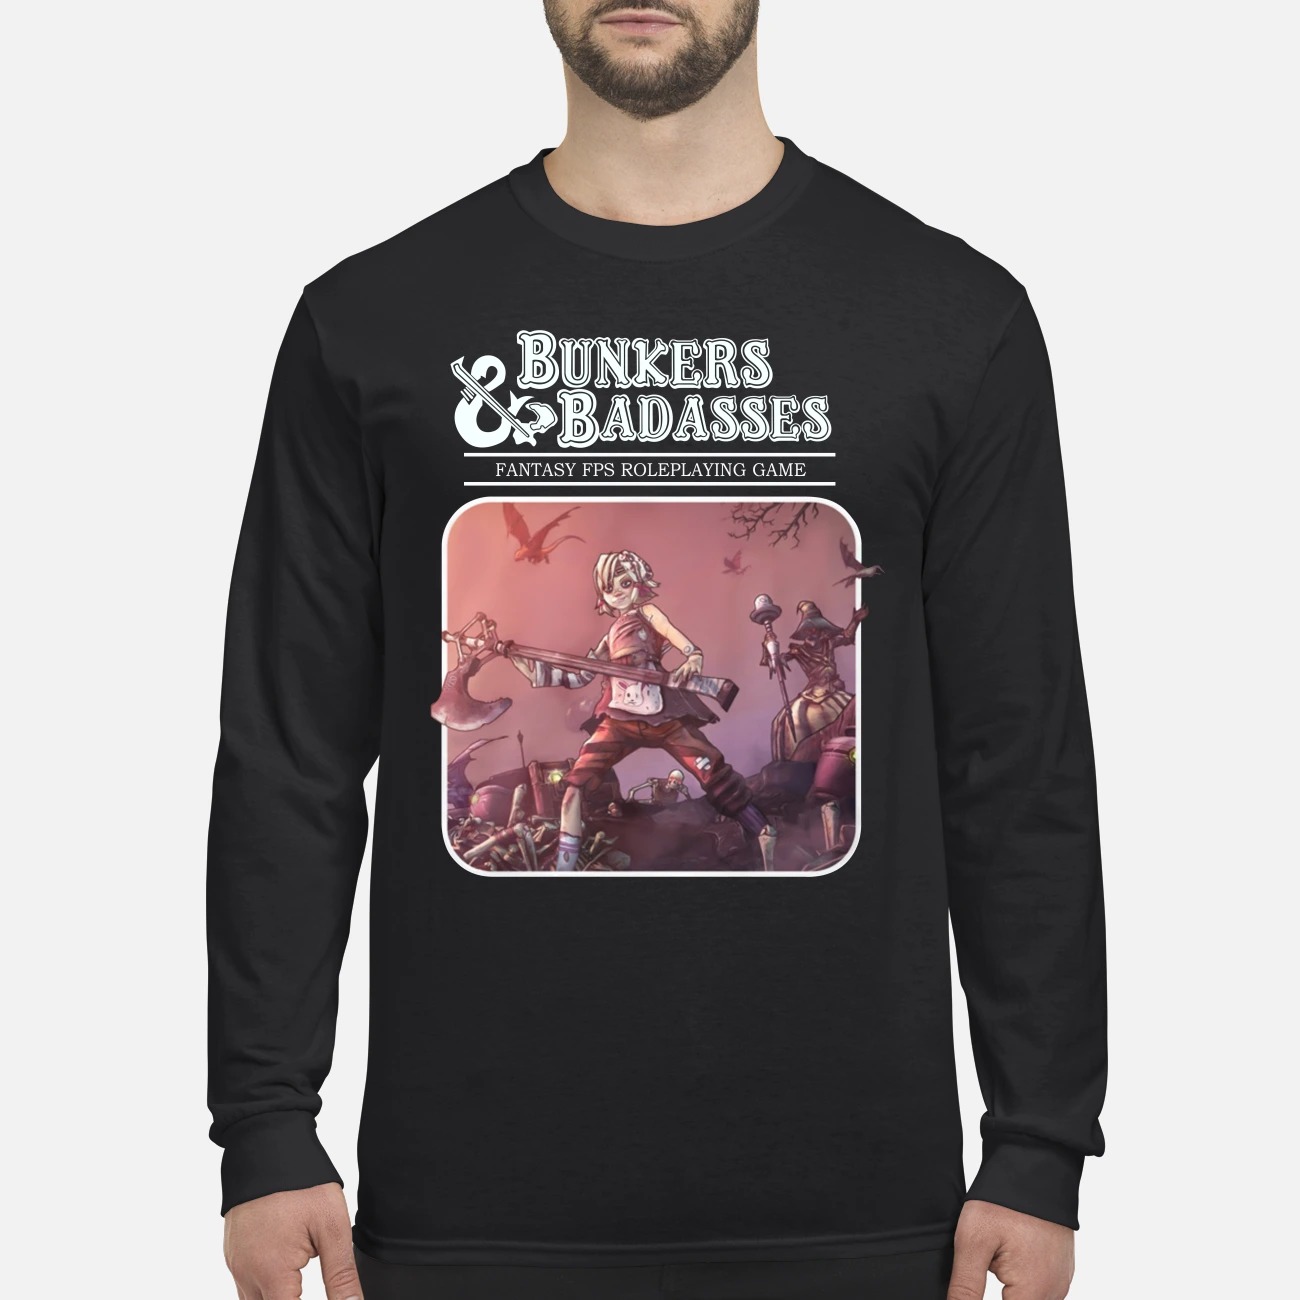 Bunkers and badasses fantasy fps game men's long sleeved shirt